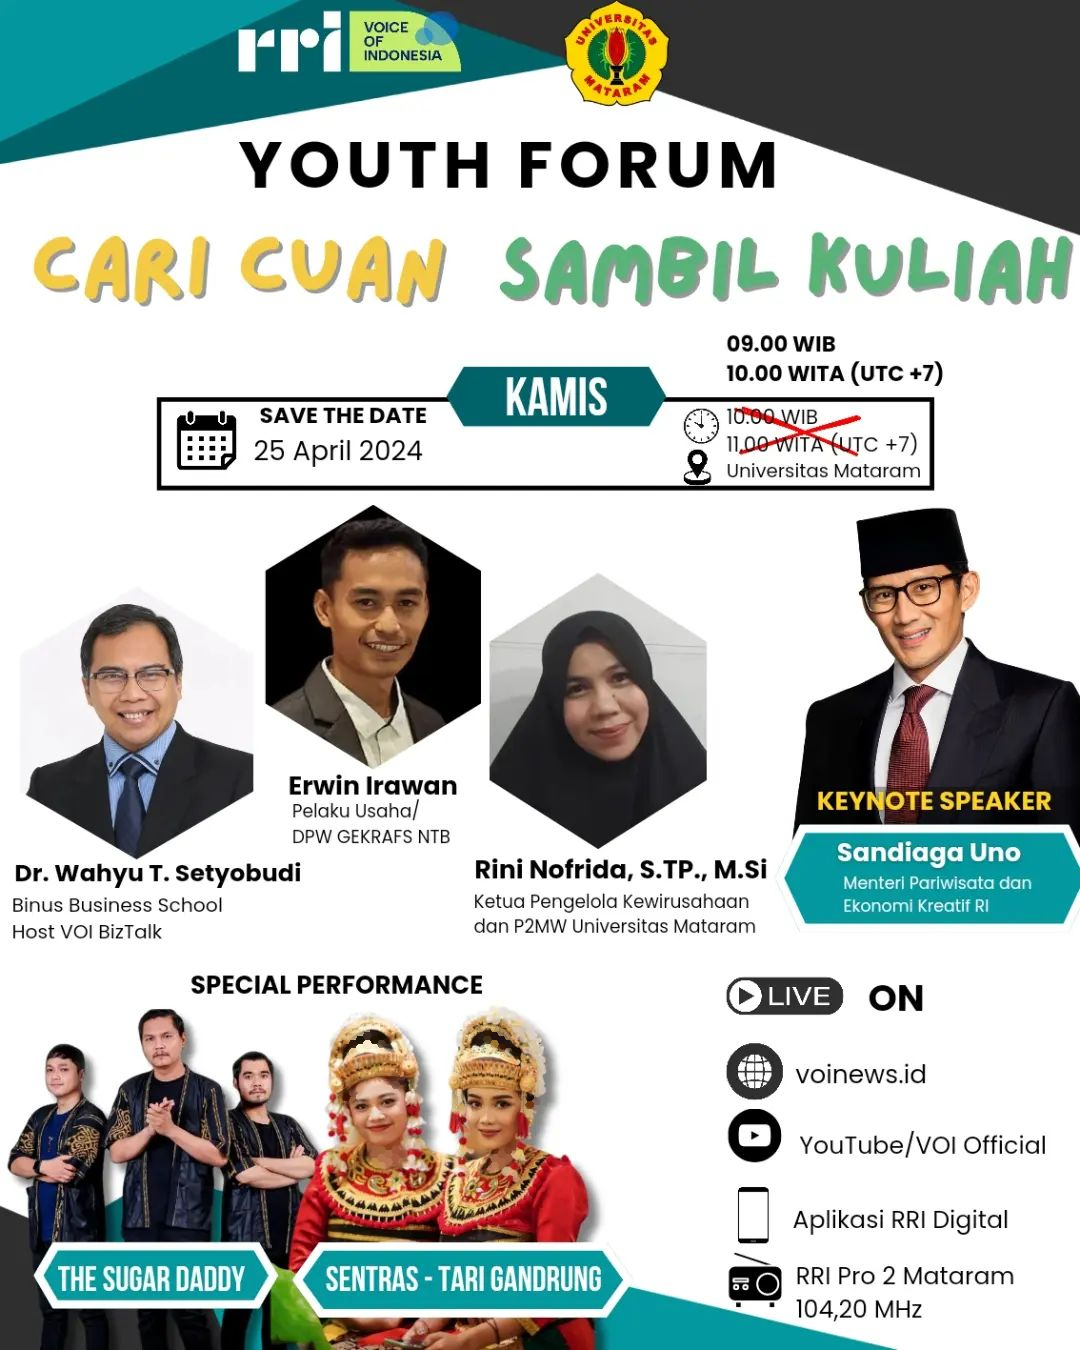 VOI Akan Gelar "Youth Forum", Hadirkan Sandiaga Uno